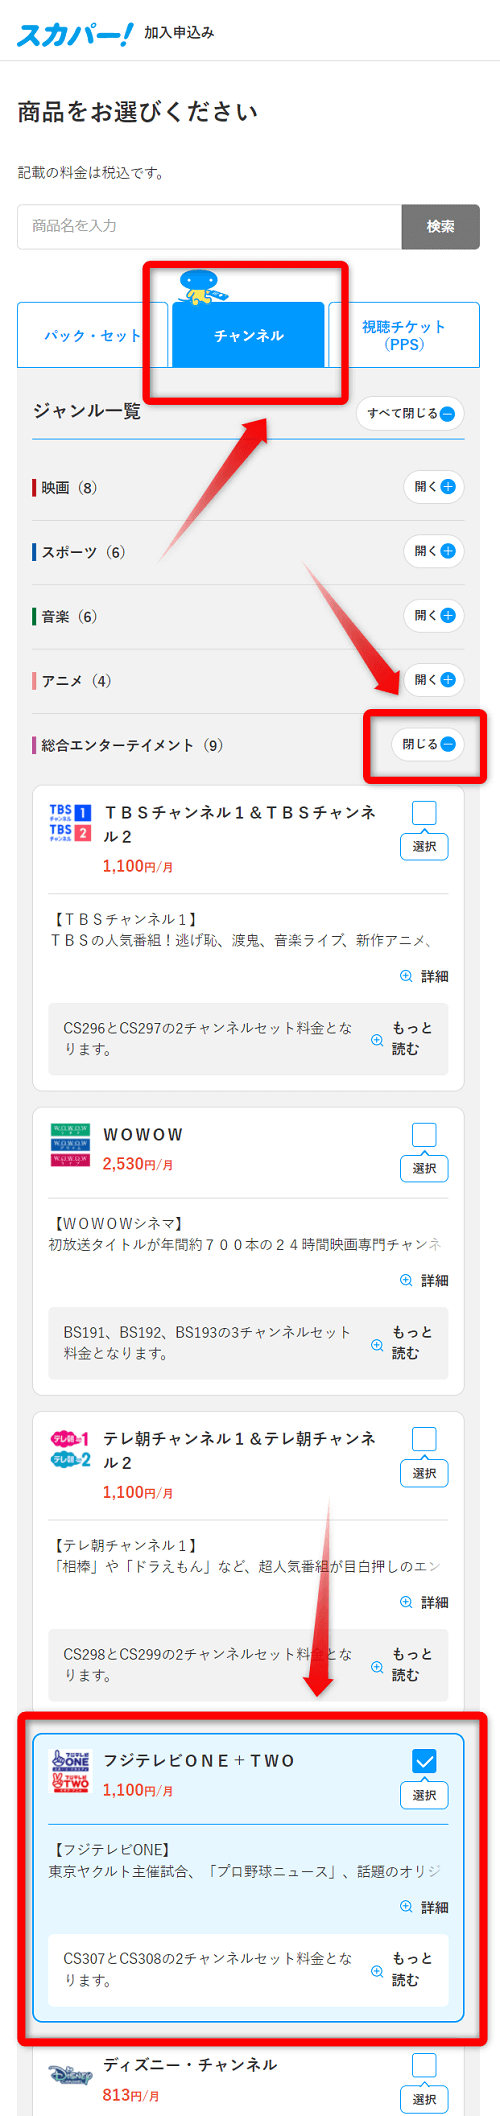 J-WAVE INSPIRE TOKYOをスカパー番組配信から視聴する手順3